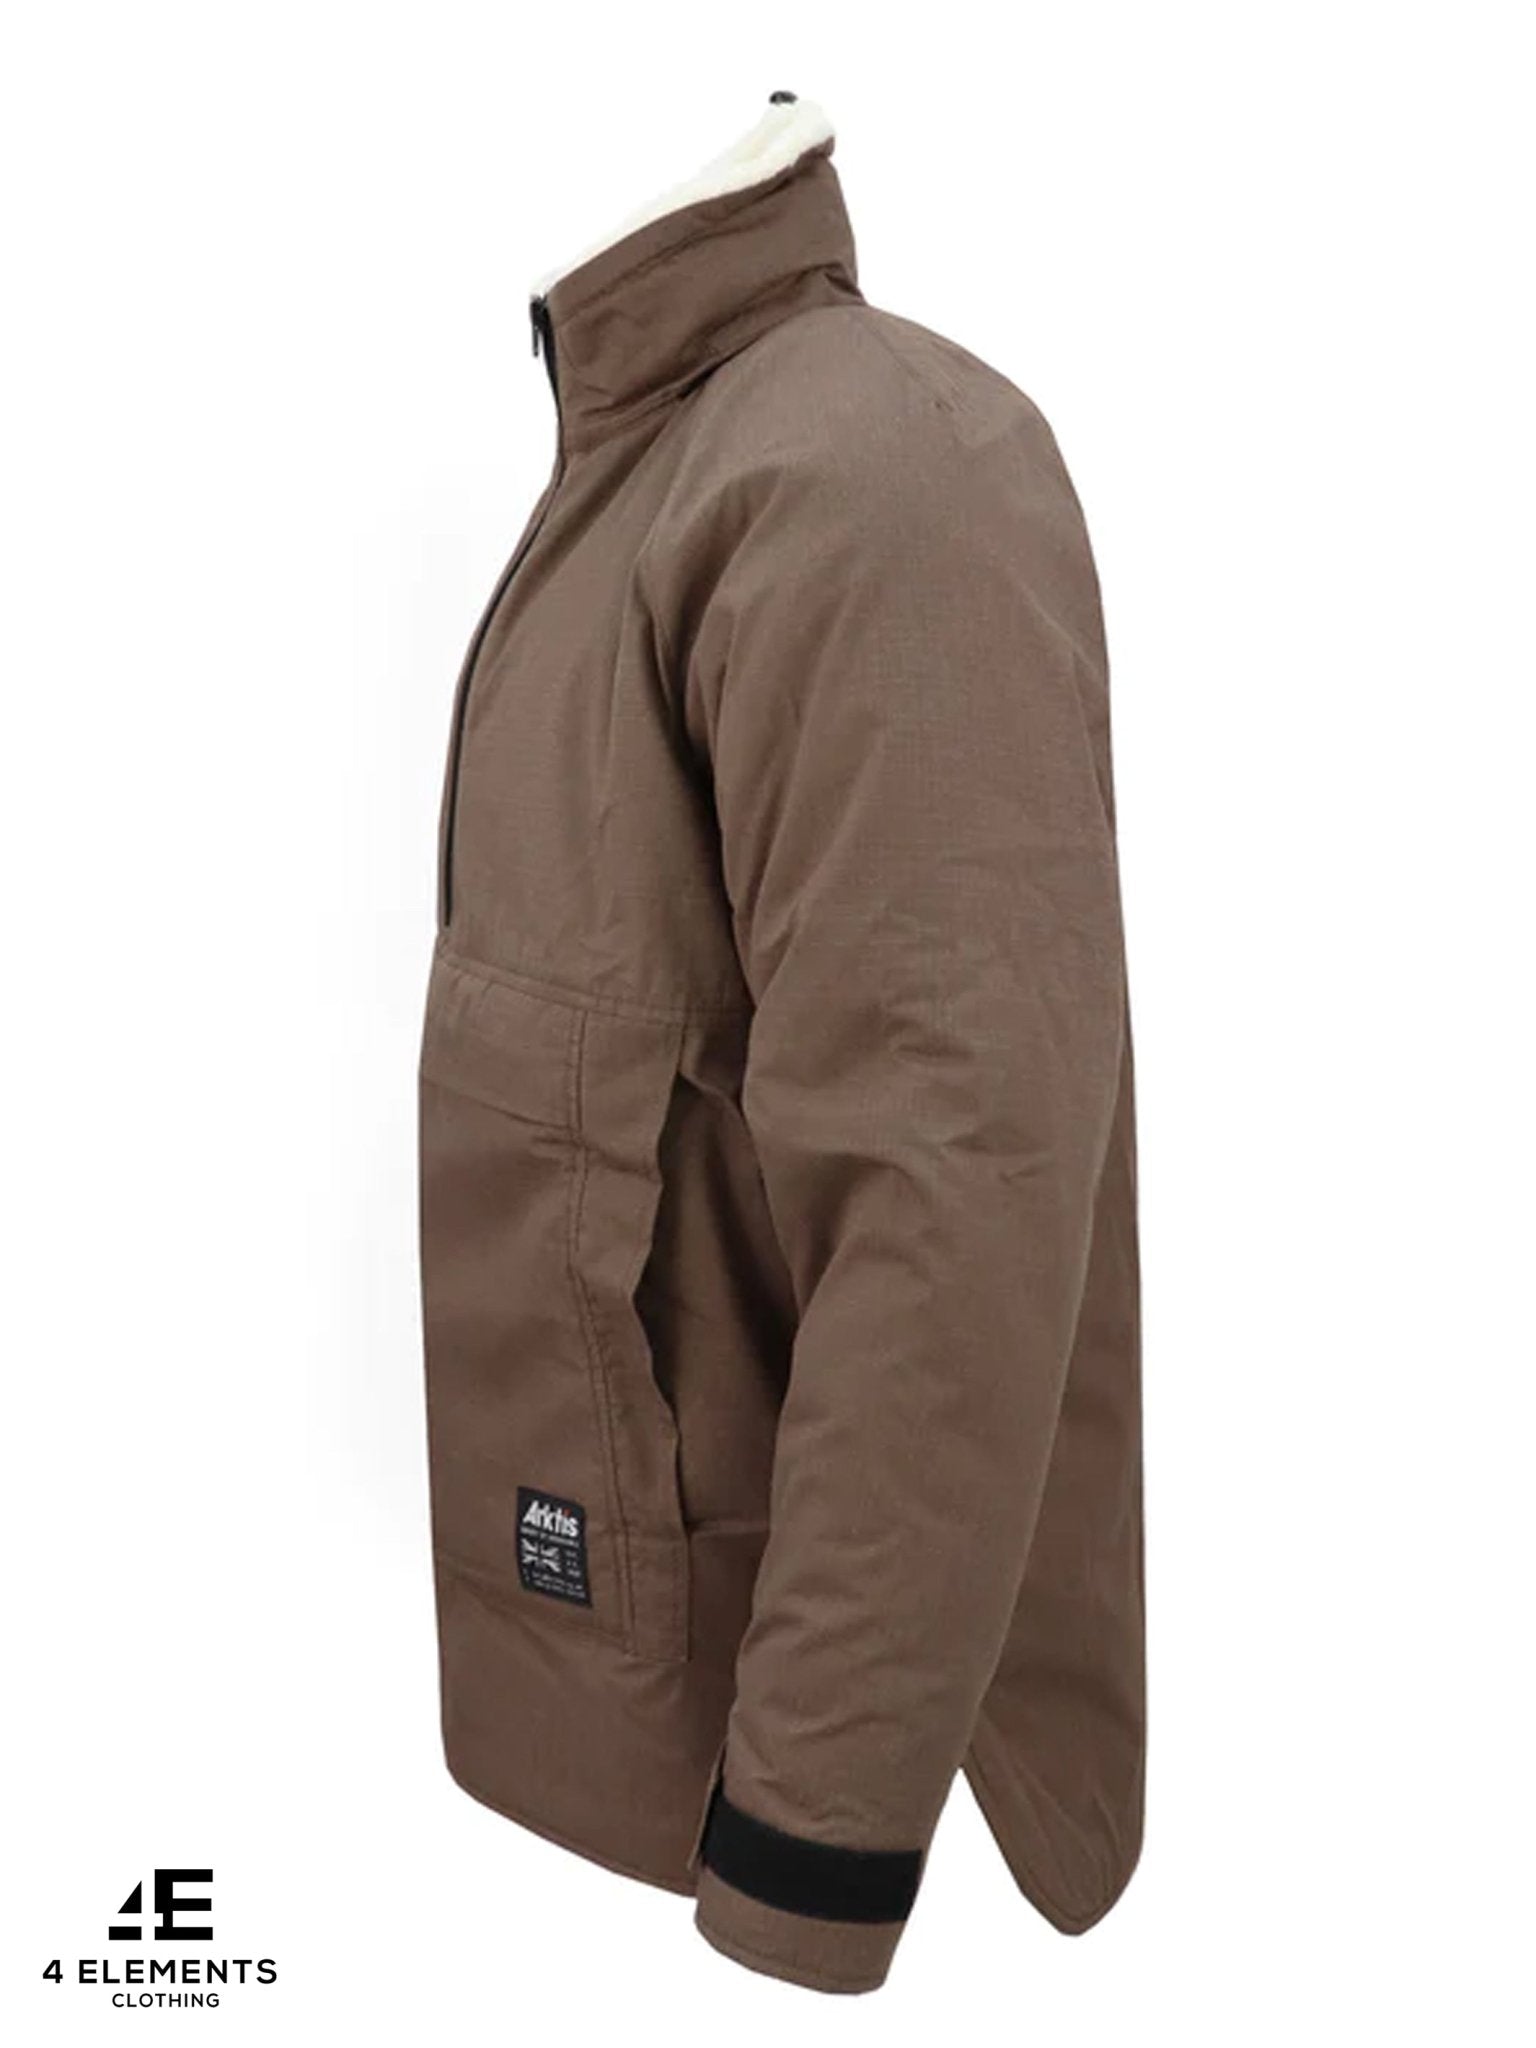 4elementsclothingArktisArktis - A220 MAMMOTH SHIRT / SMOCK / Mens Jacket / Mens coat - With Hood & warmlinedOuterwearA220-XS-BLK